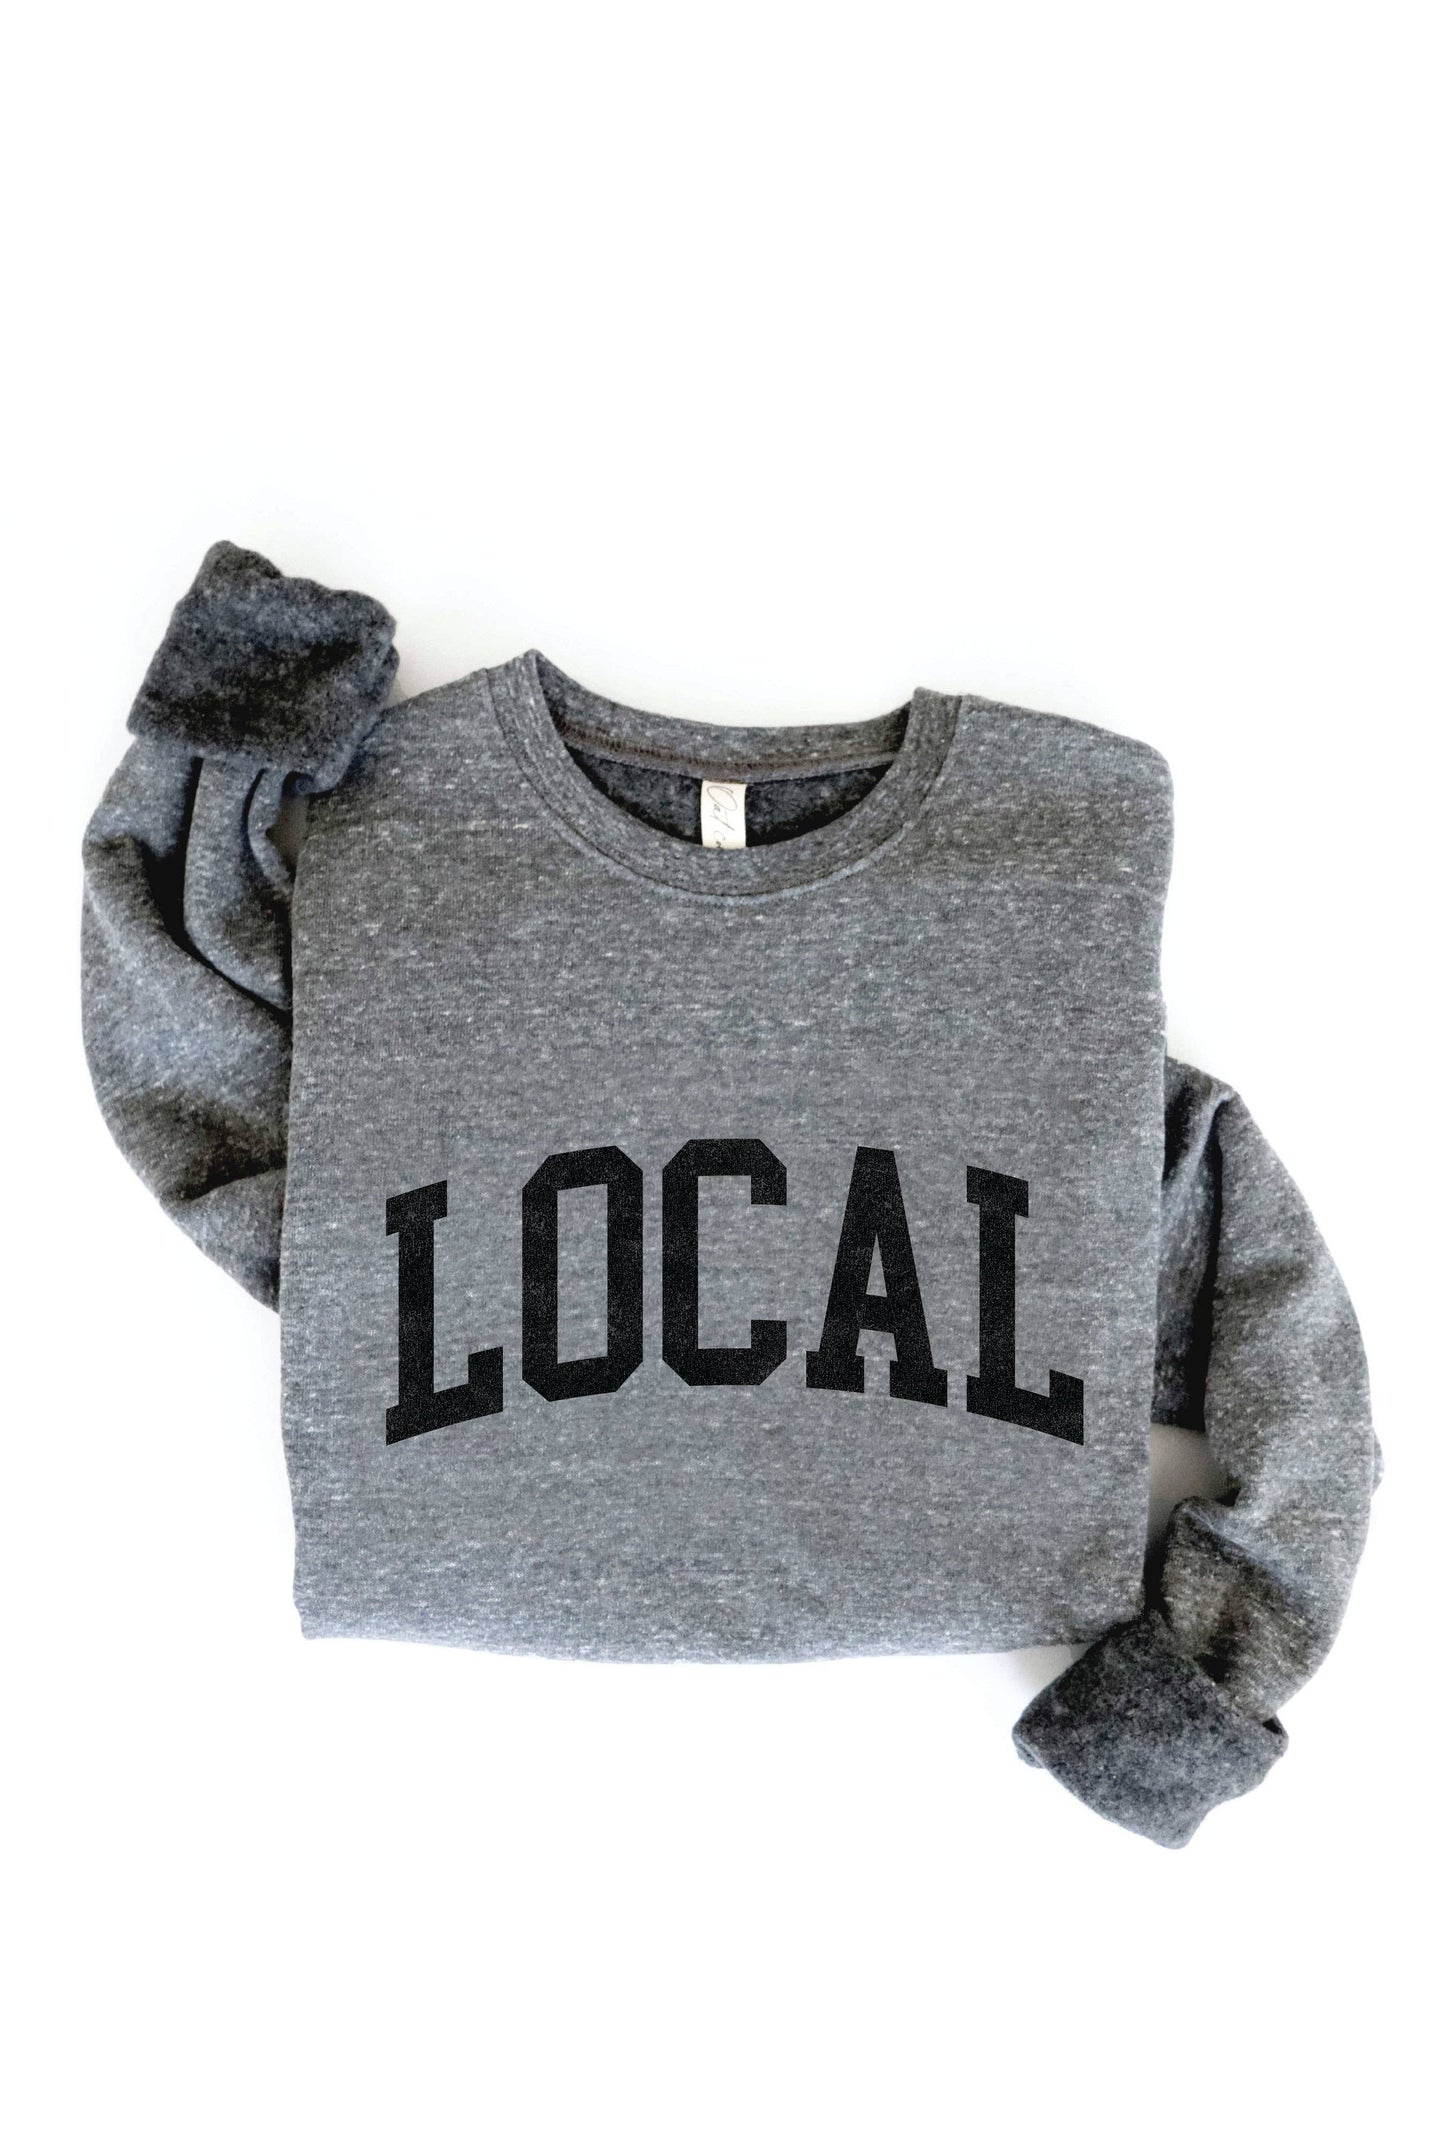 LOCAL graphic sweatshirt: XL / MAROON